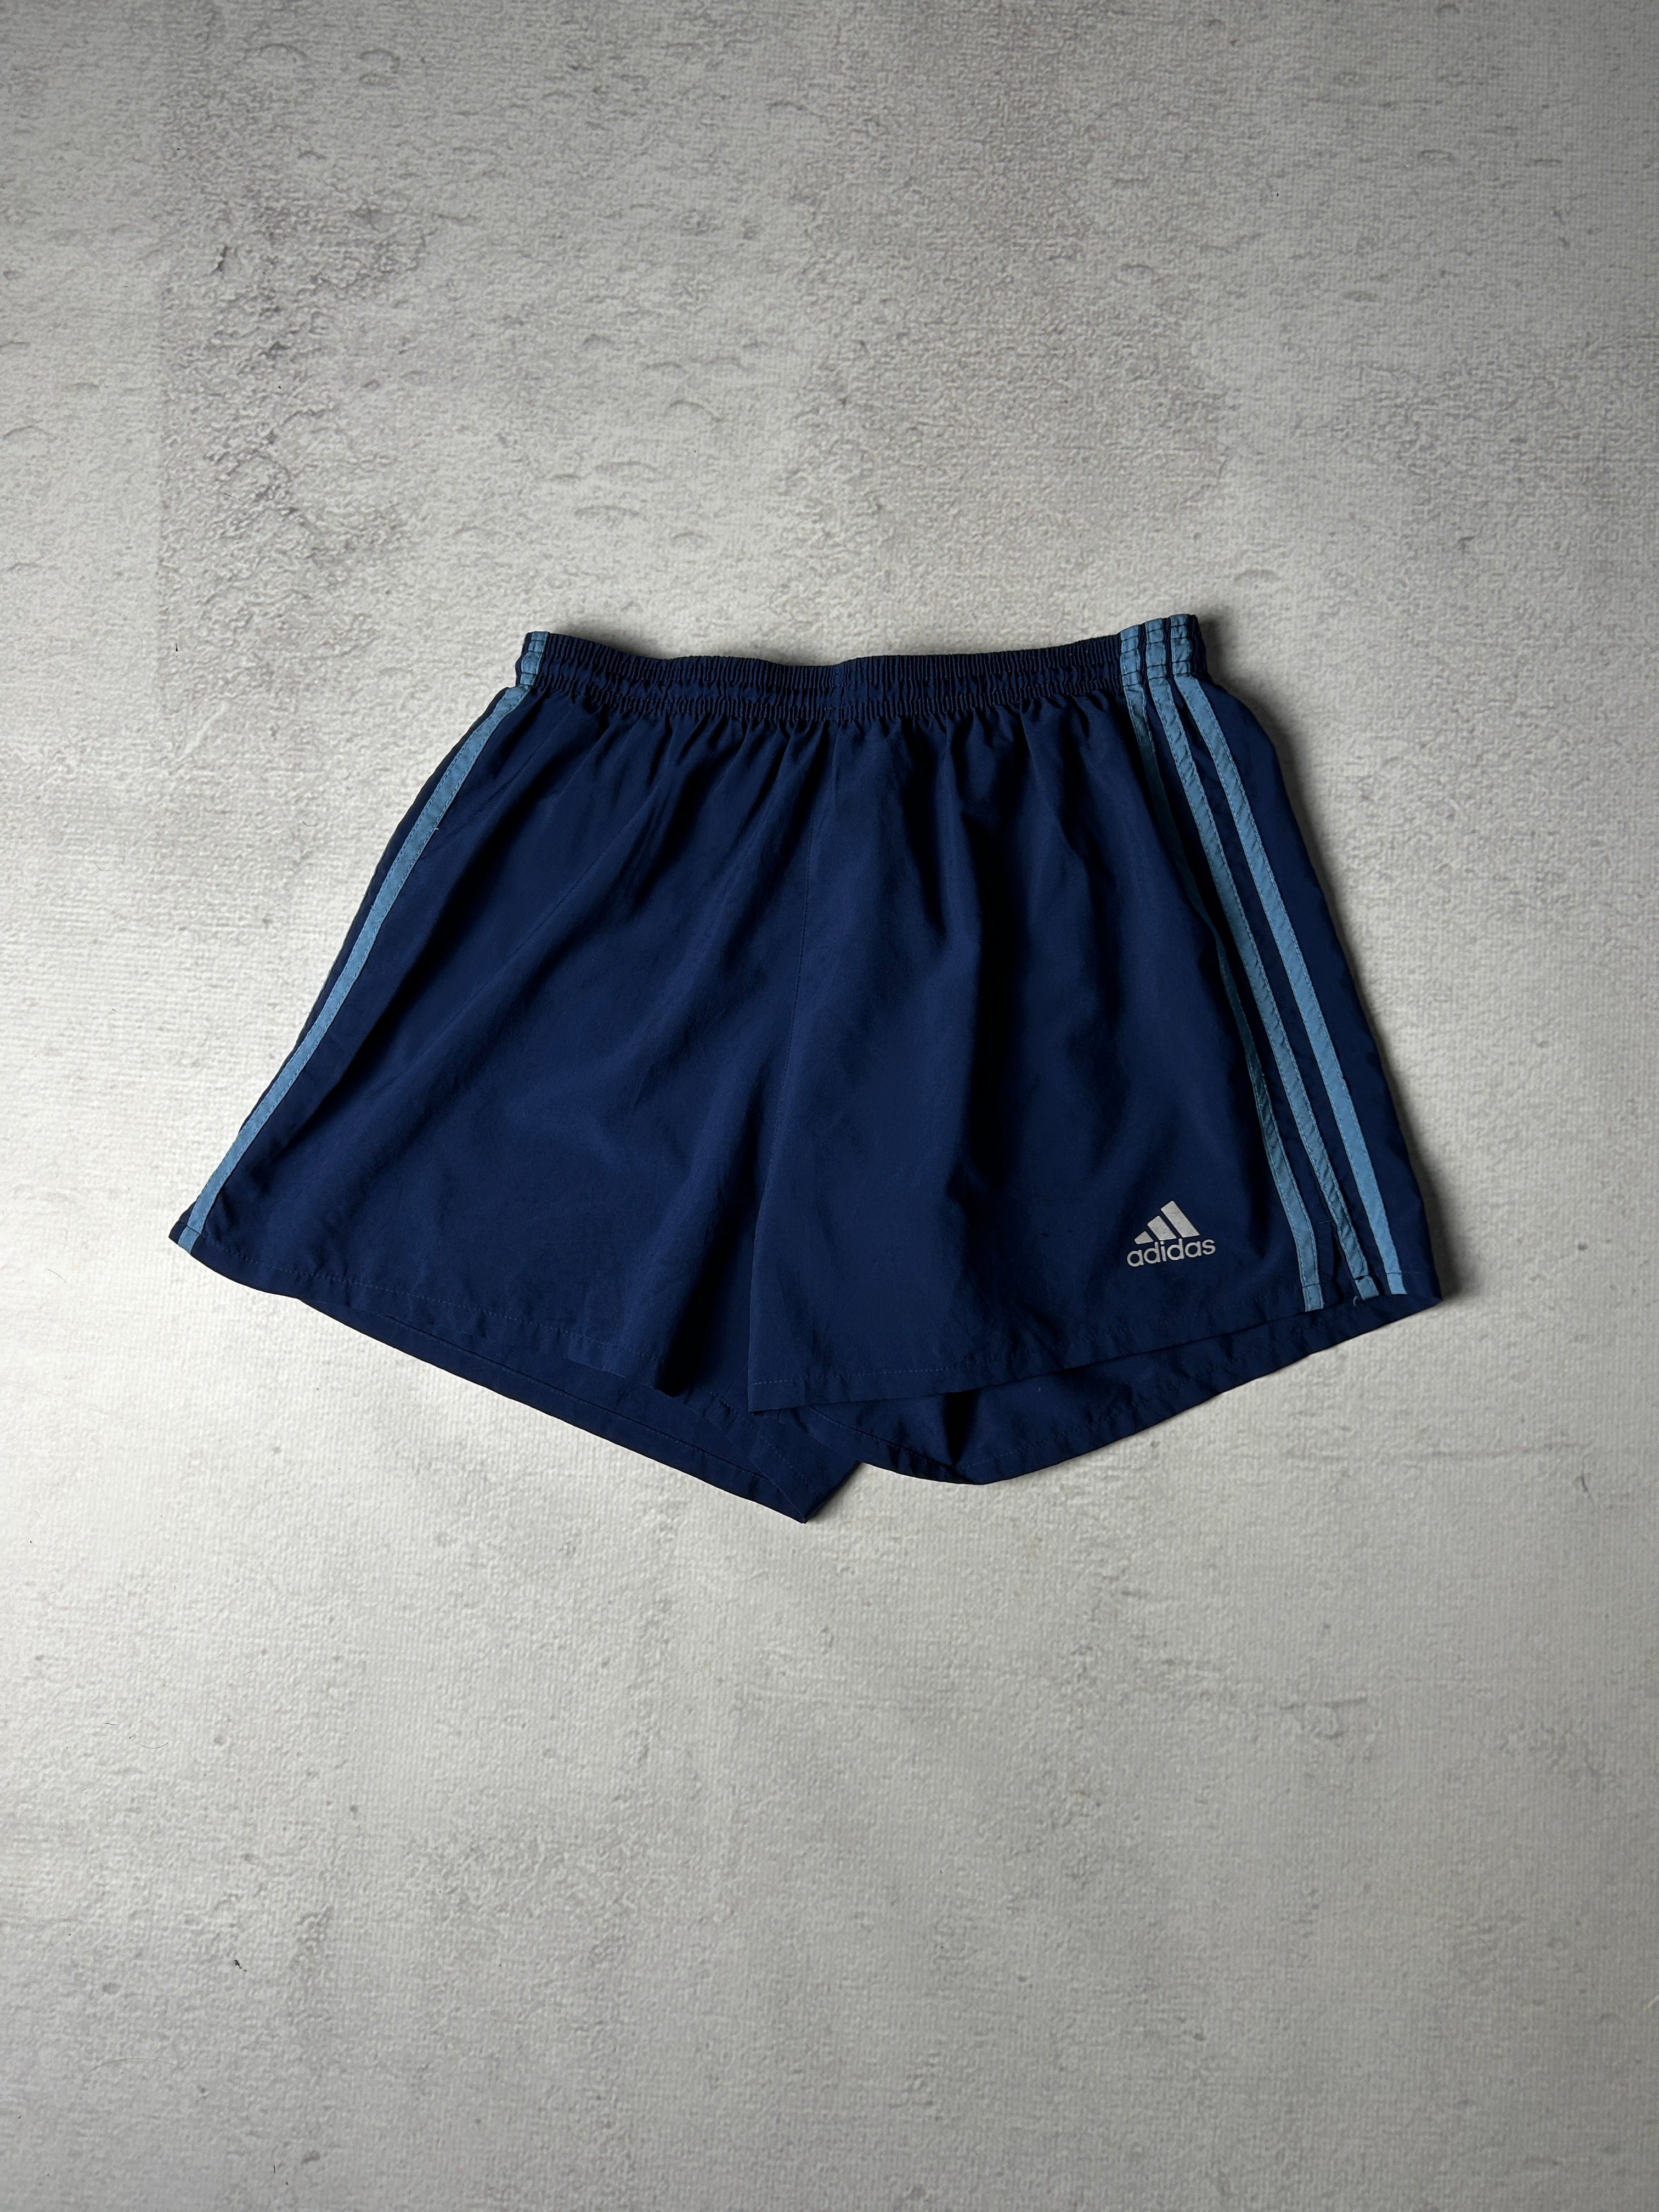 Vintage Adidas Track Shorts - Women's XL